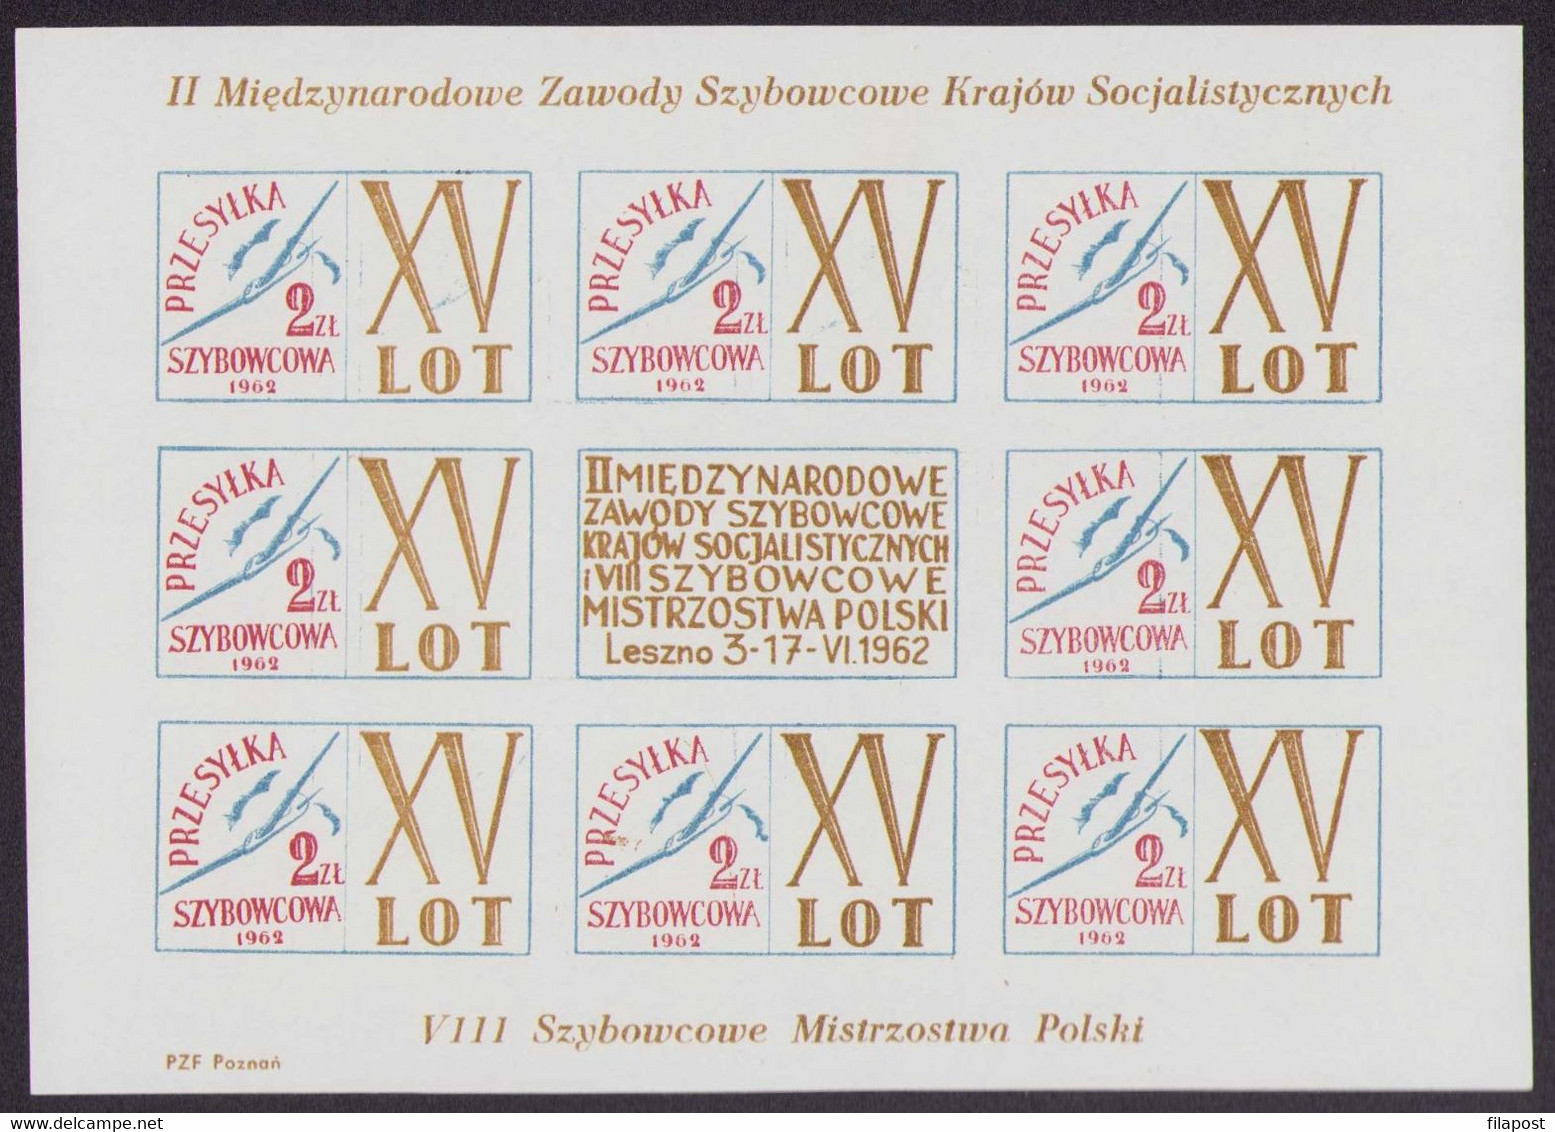 POLAND 1962 Interational & Polish Gliding Championships / Socialist Countries, LOT, Airplane, Plane, Full Sheet MNH**P71 - Ganze Bögen